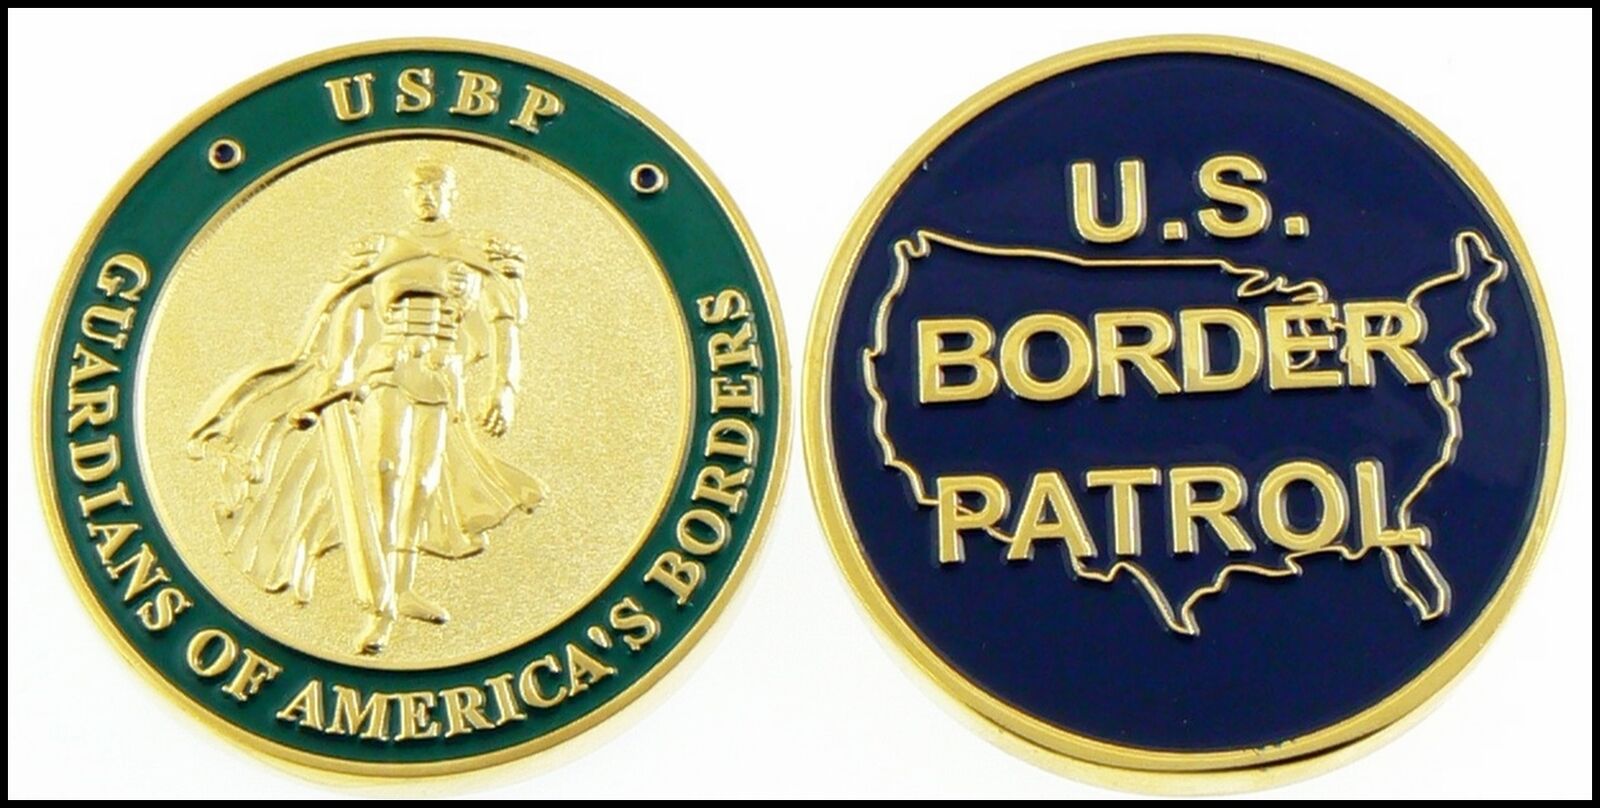 U.S. BORDER PATROL GUARDIANS OF THE BORDER